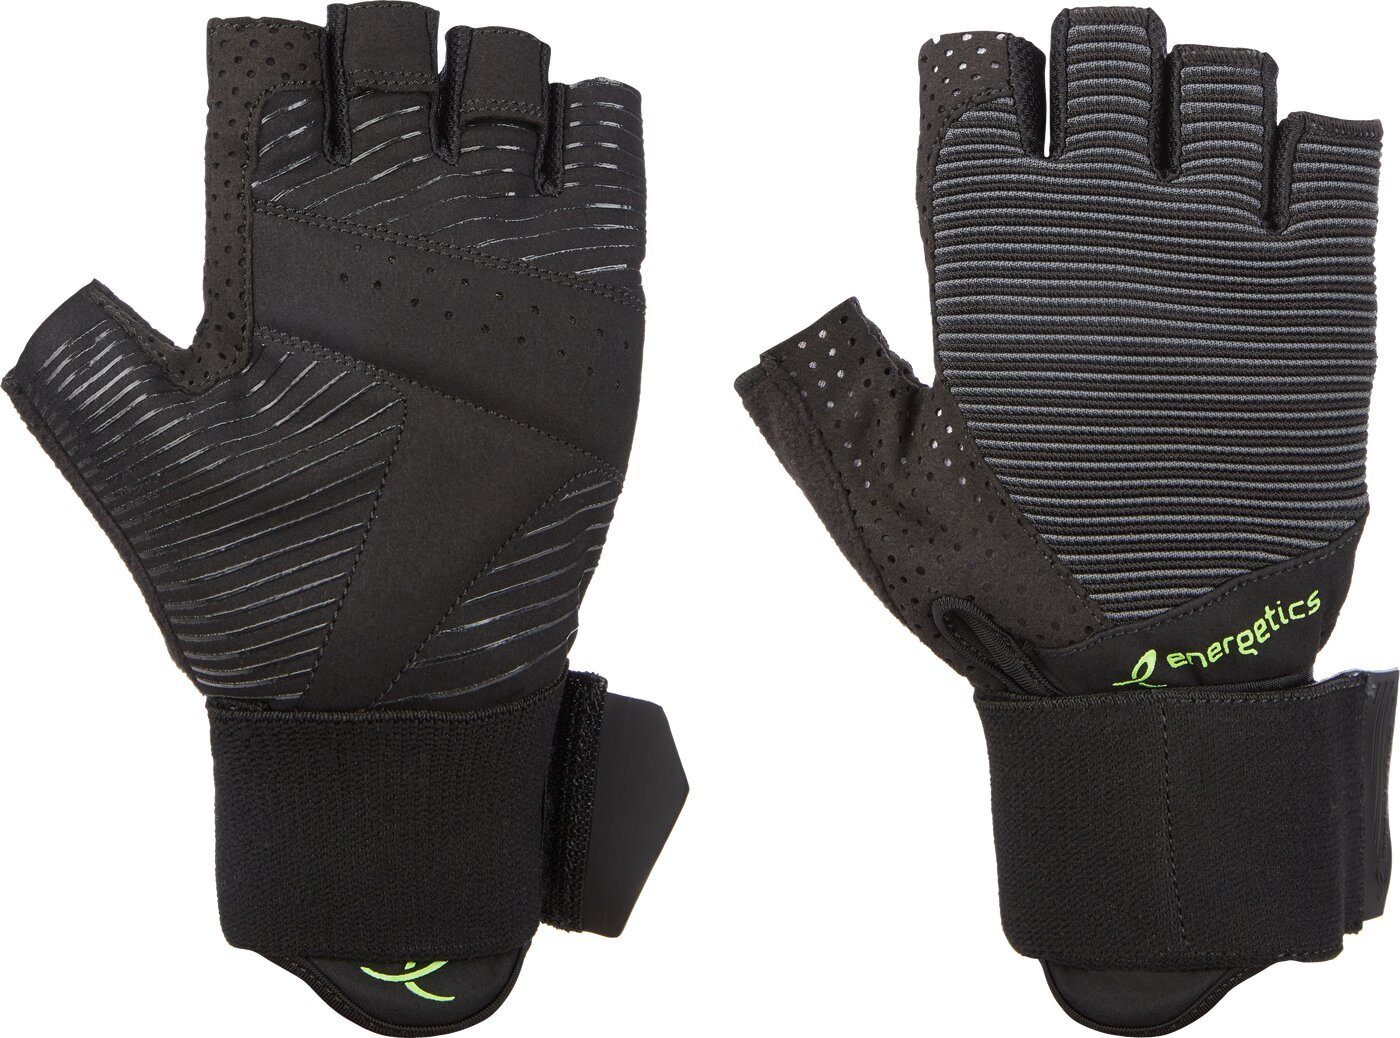 MFG550 Energetics Handschuh BLACK/YELLOW Gewichtshandschuhe